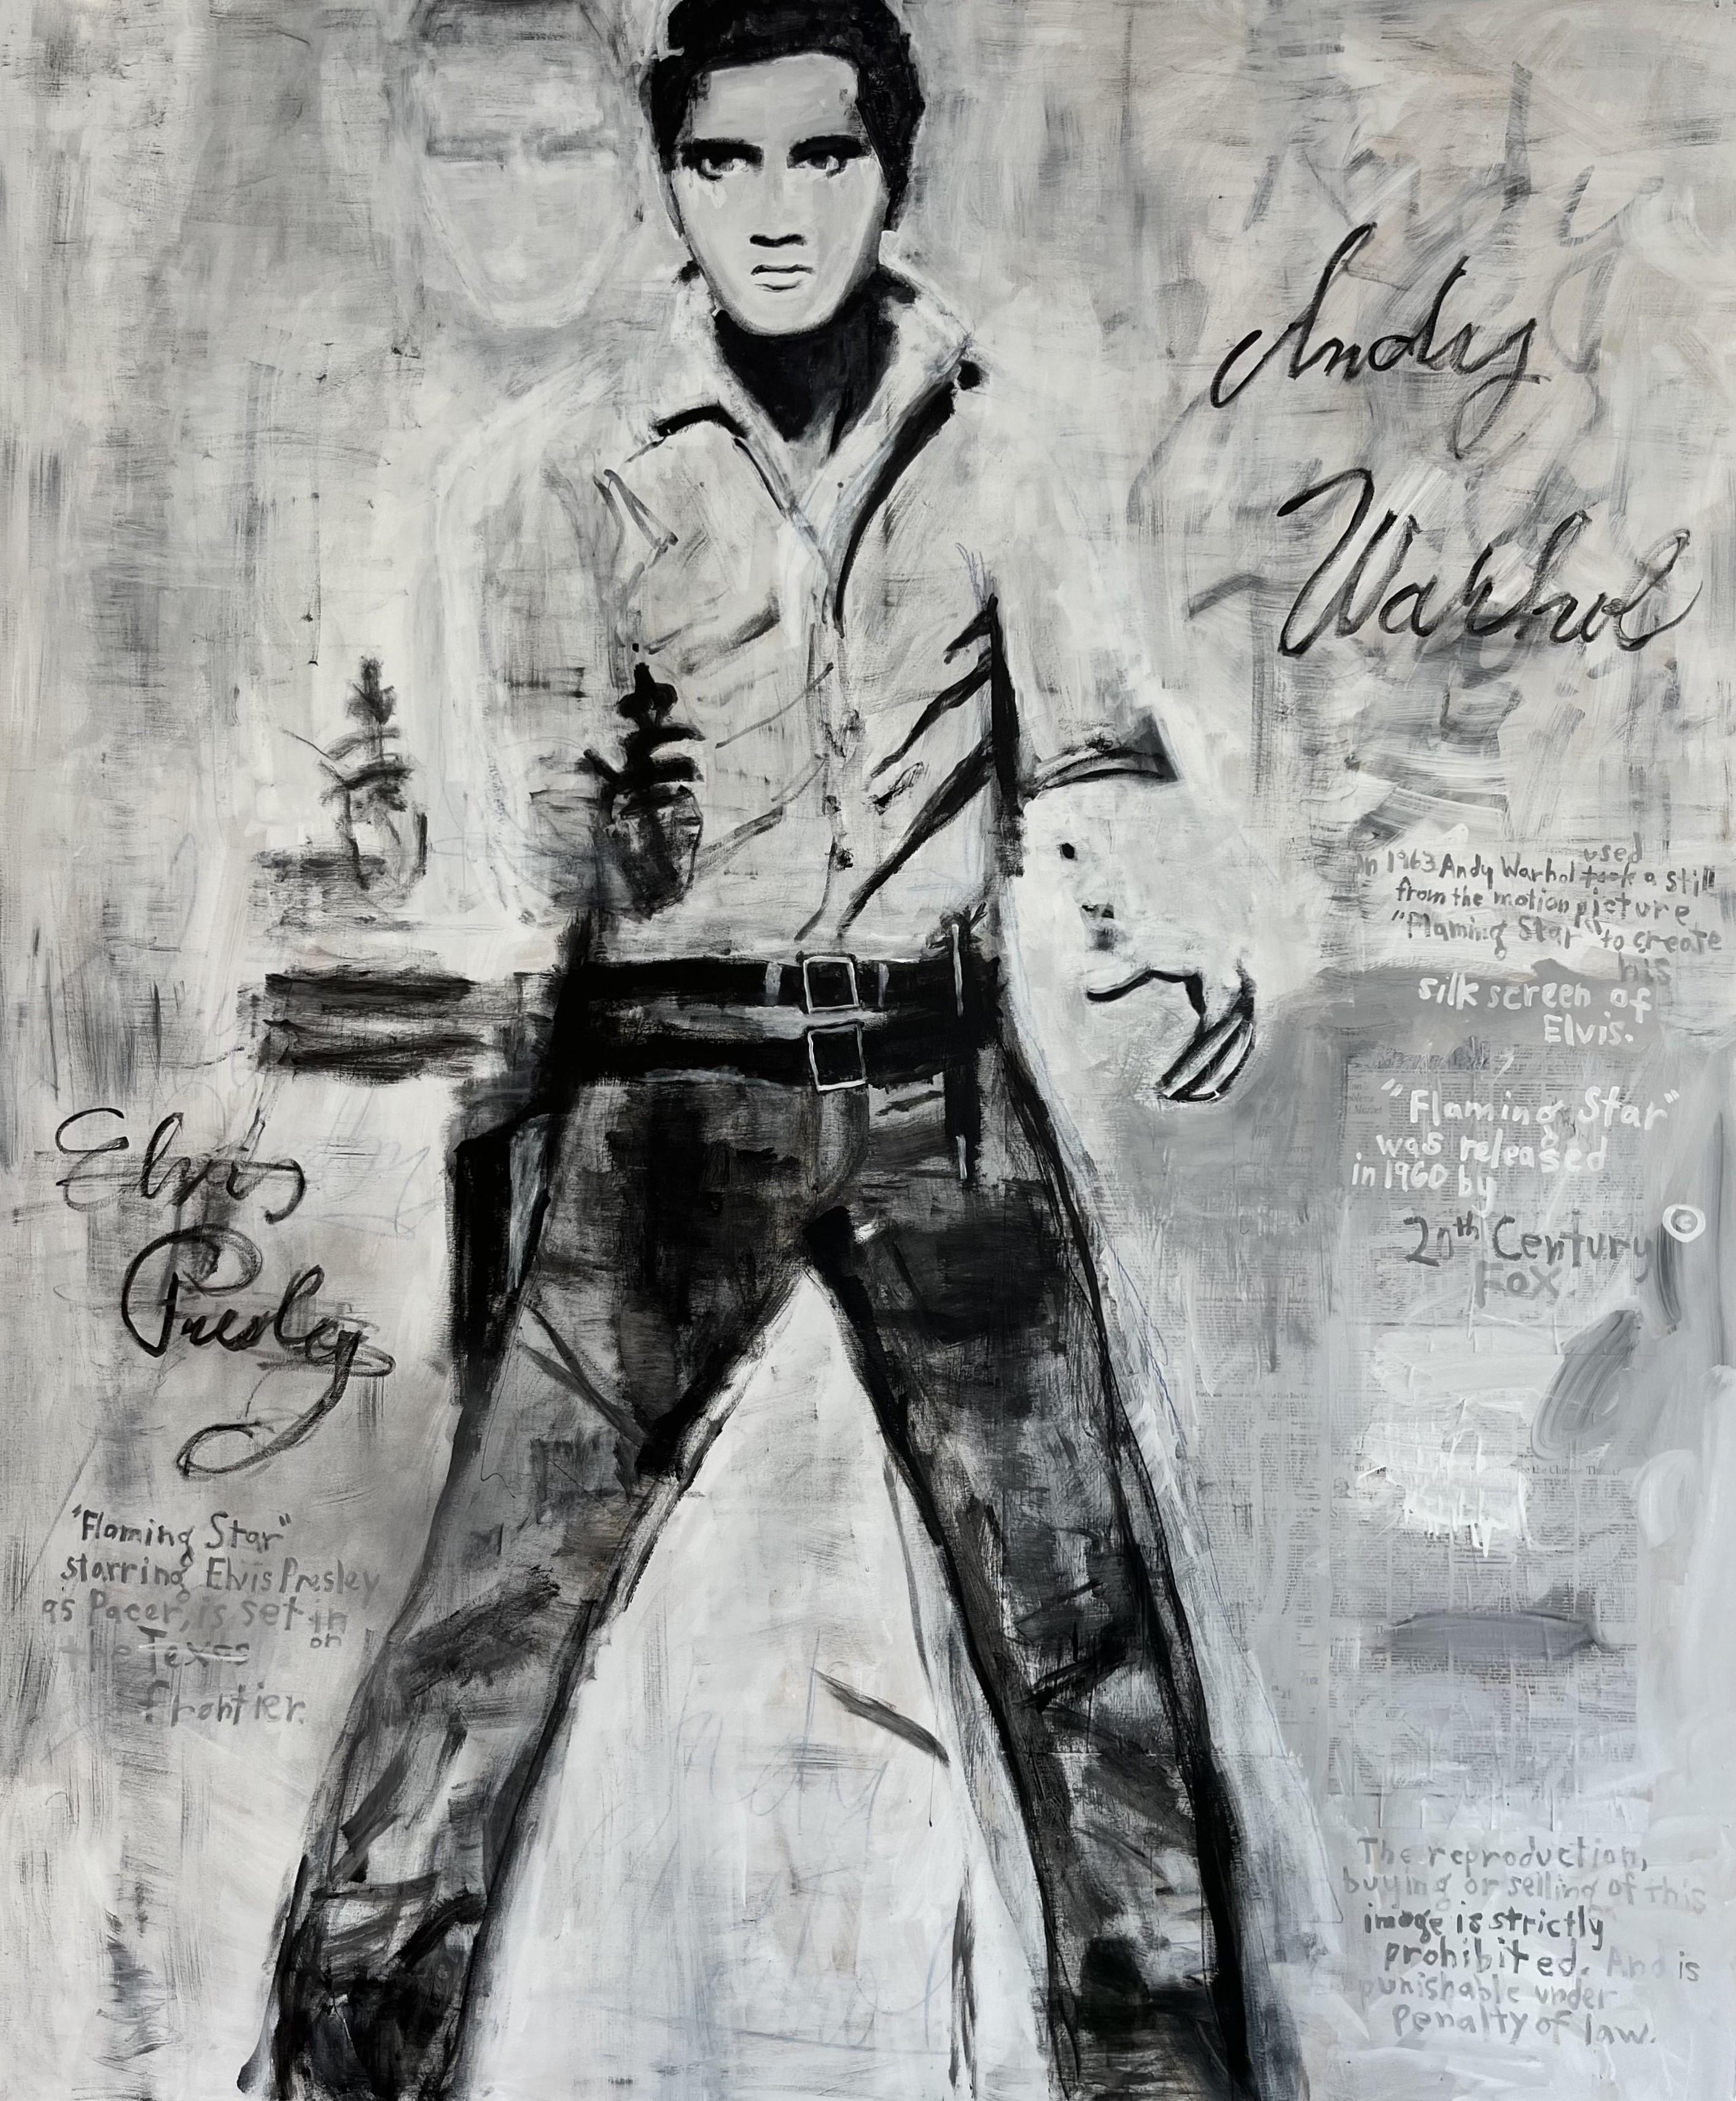 Tyler Casey Portrait Painting – "Elvis" Contemporary Abstract Schwarz/Weiß Andy Warhol inspirierte Pop Art Malerei